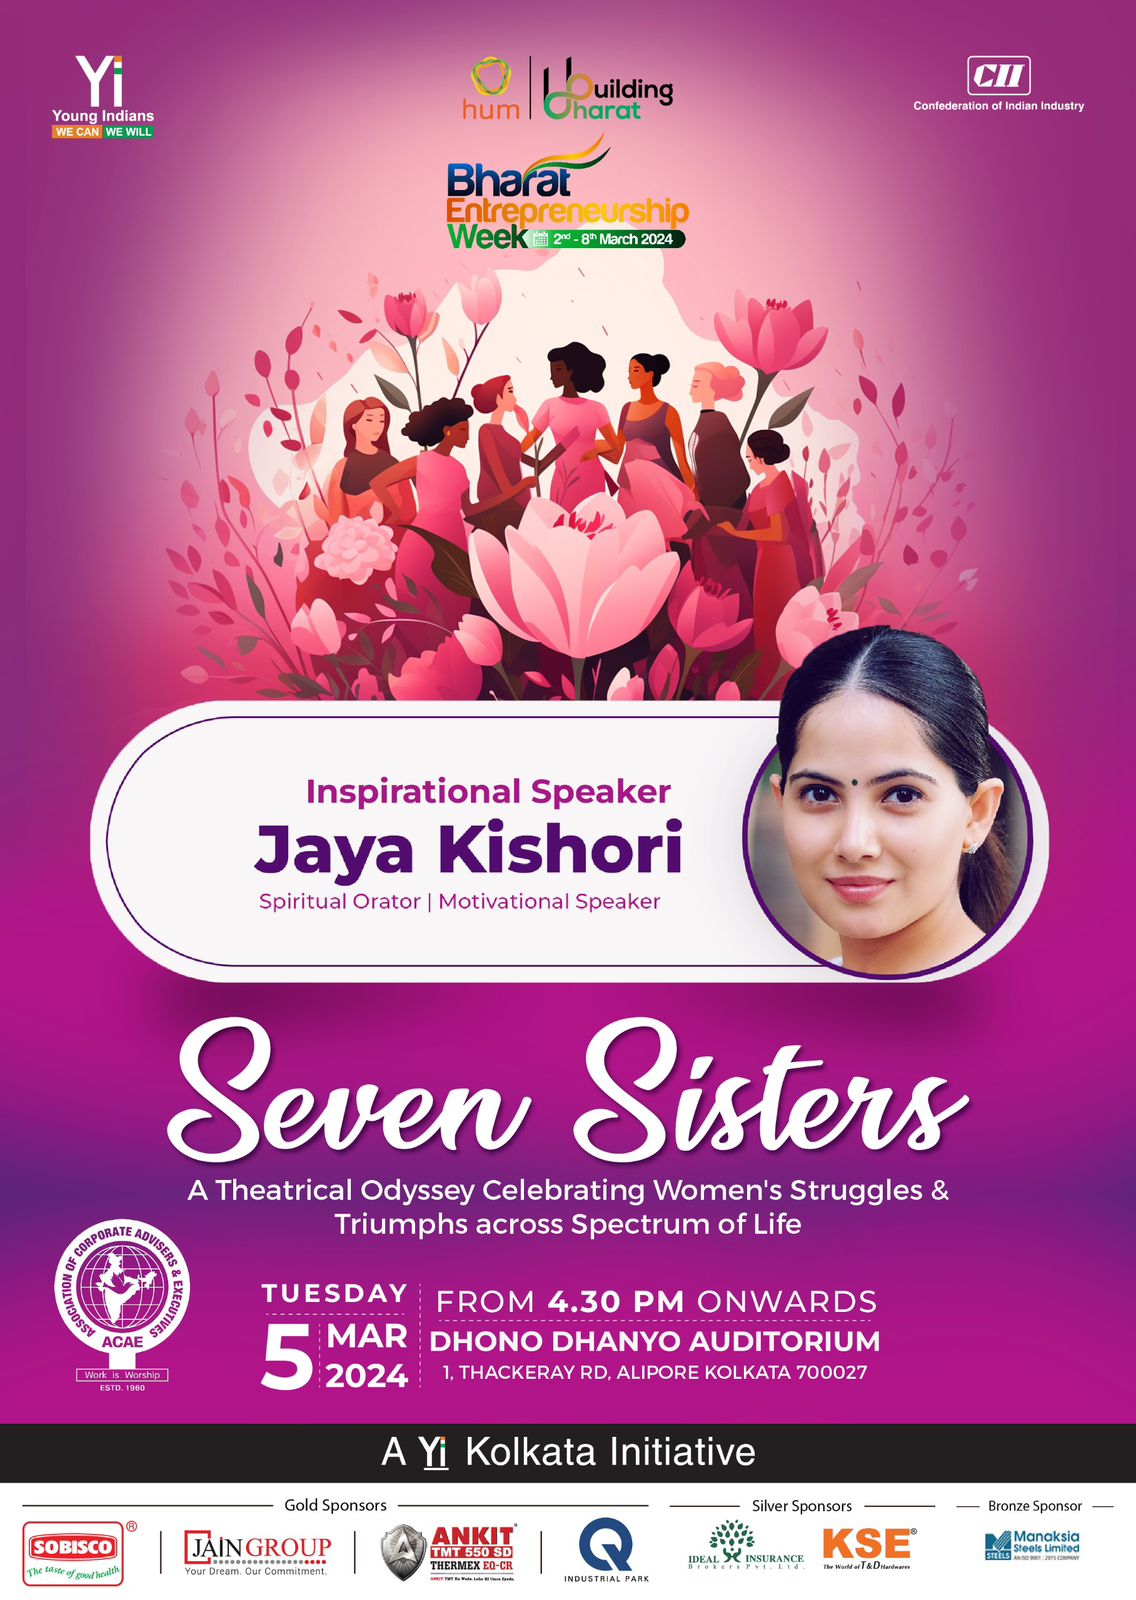 Yi24 | Entrepreneurship - Seven Sisters - Bharat Entrepreneurship Week